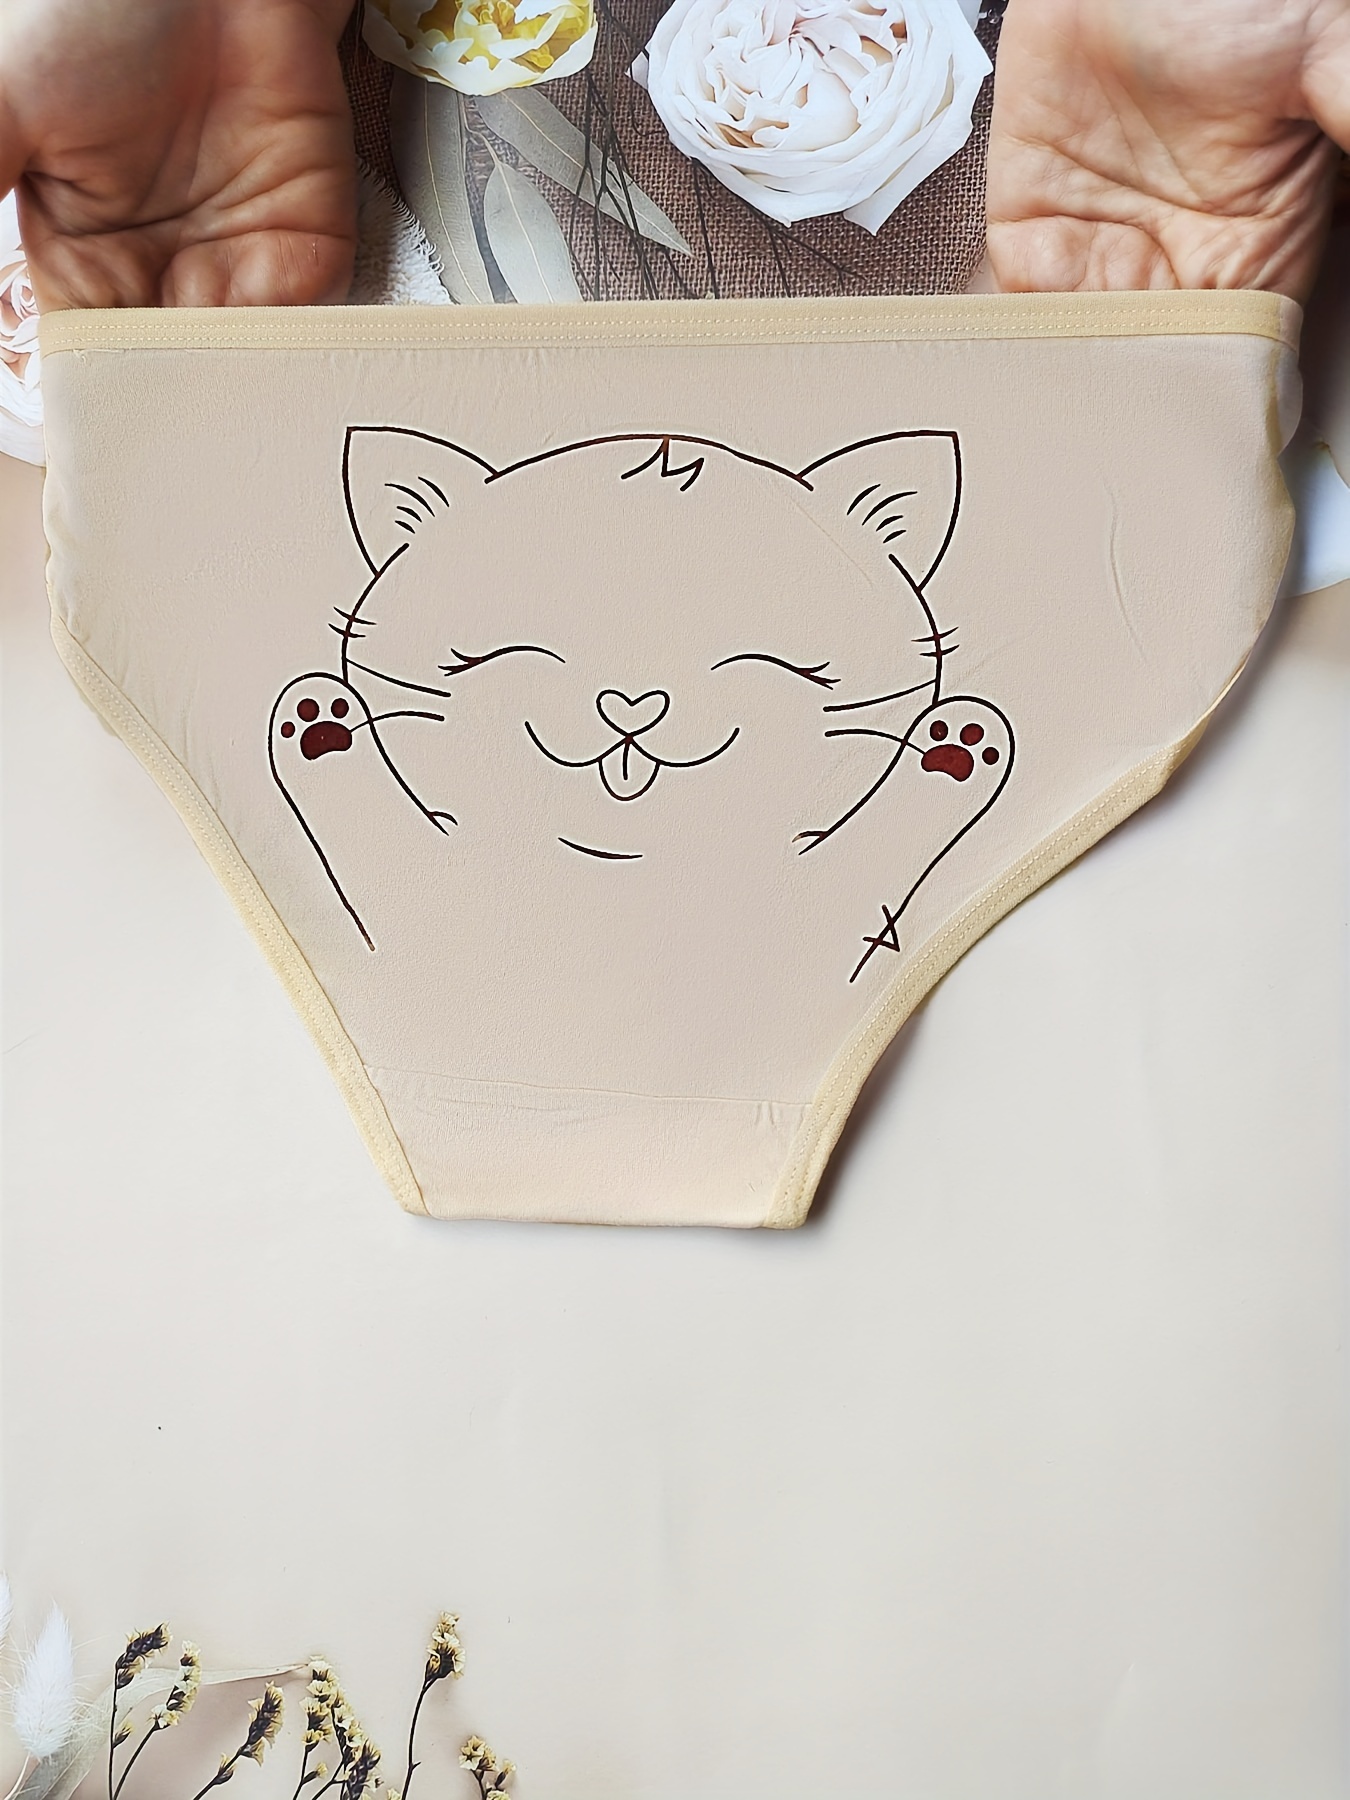 Cute Slogan & Cat Print Briefs, Comfy Breathable Stretchy Intimates  Panties, Women's Lingerie & Underwear